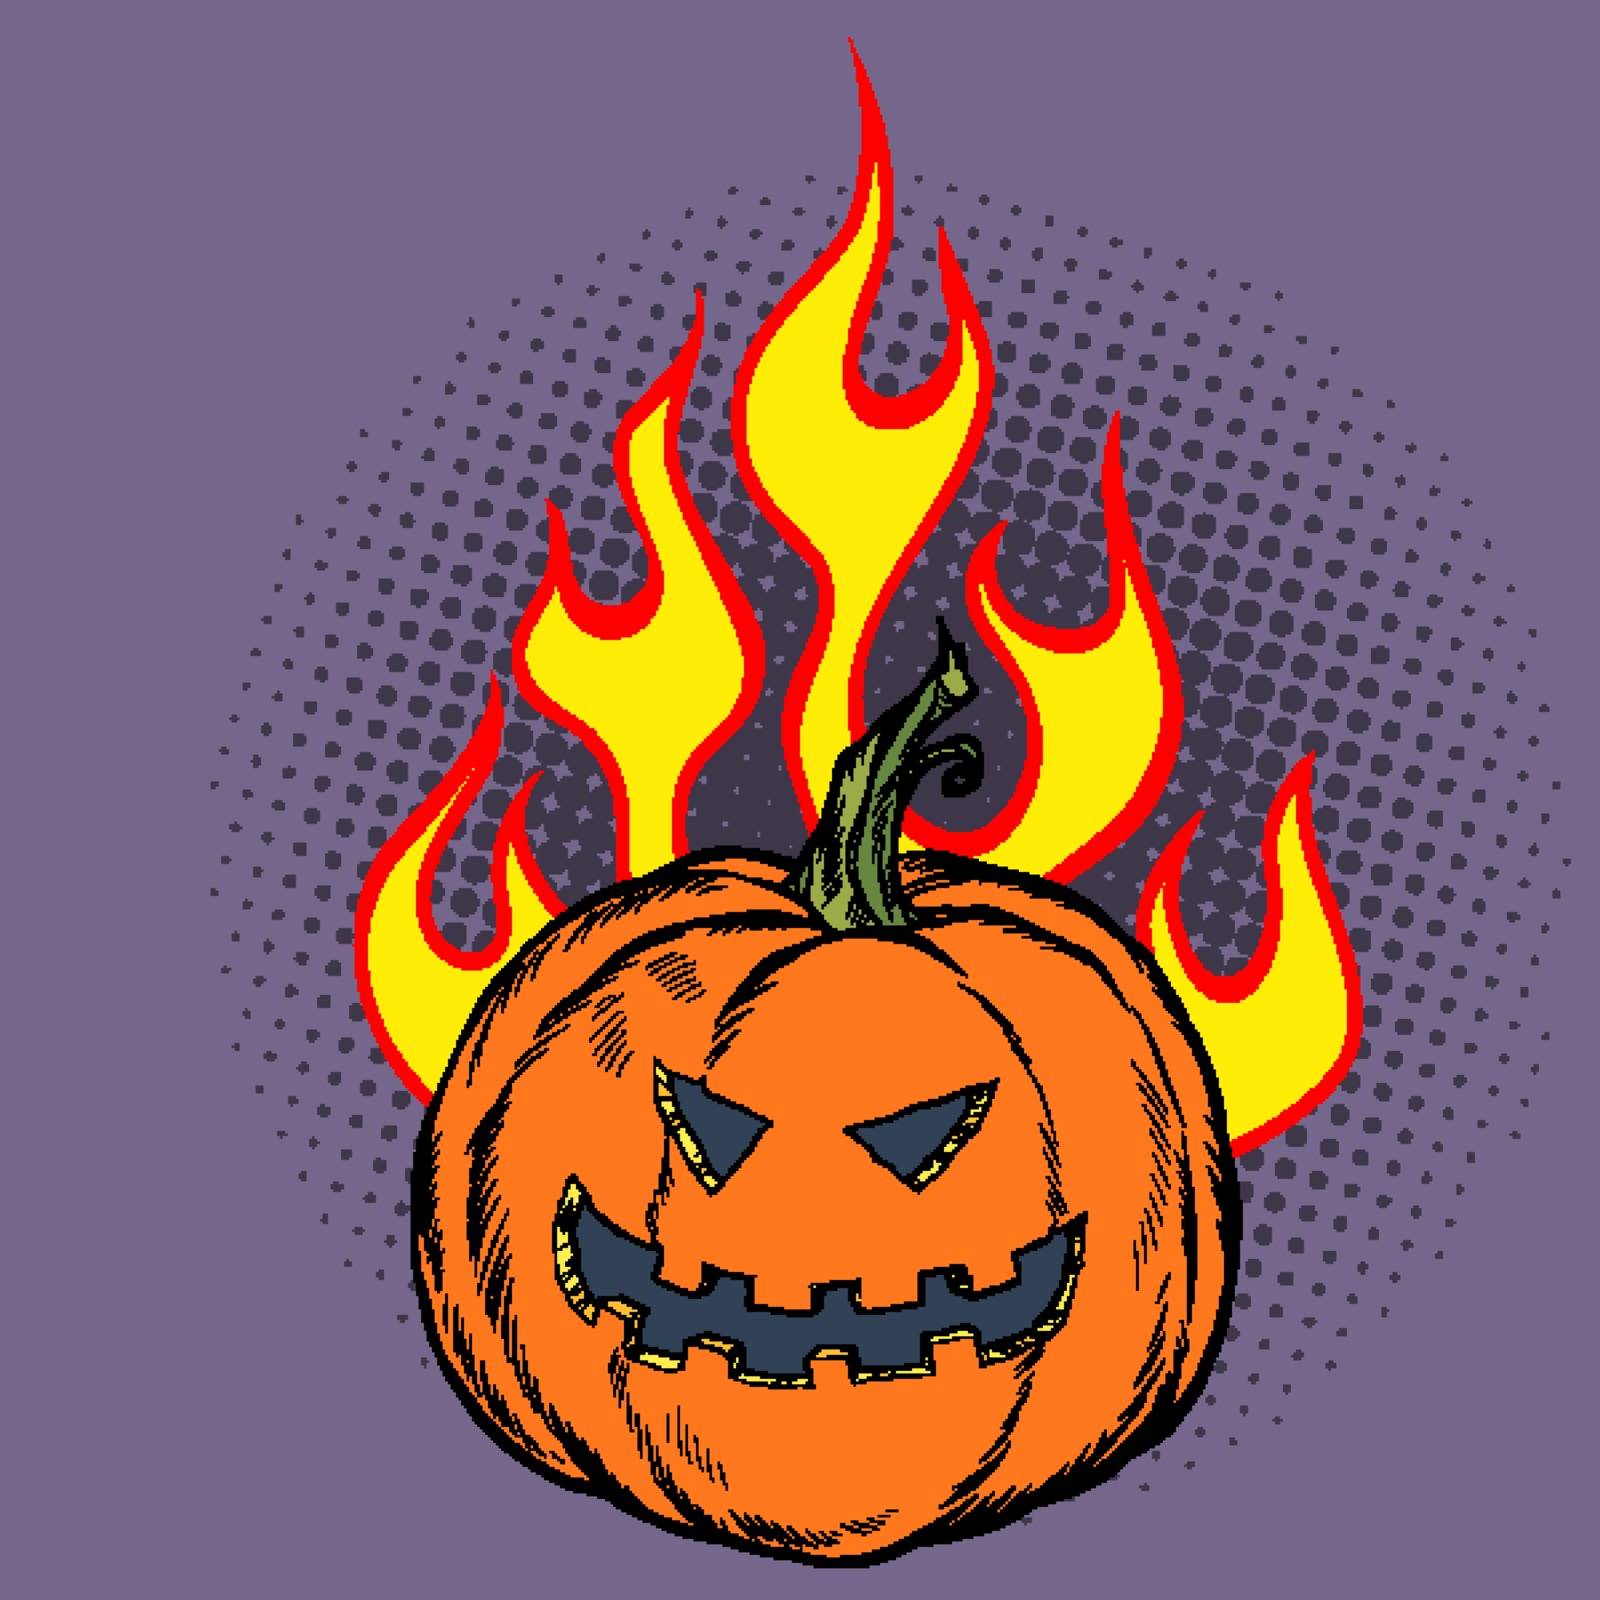 Halloween pumpkin in the flames of hell by studiostoks